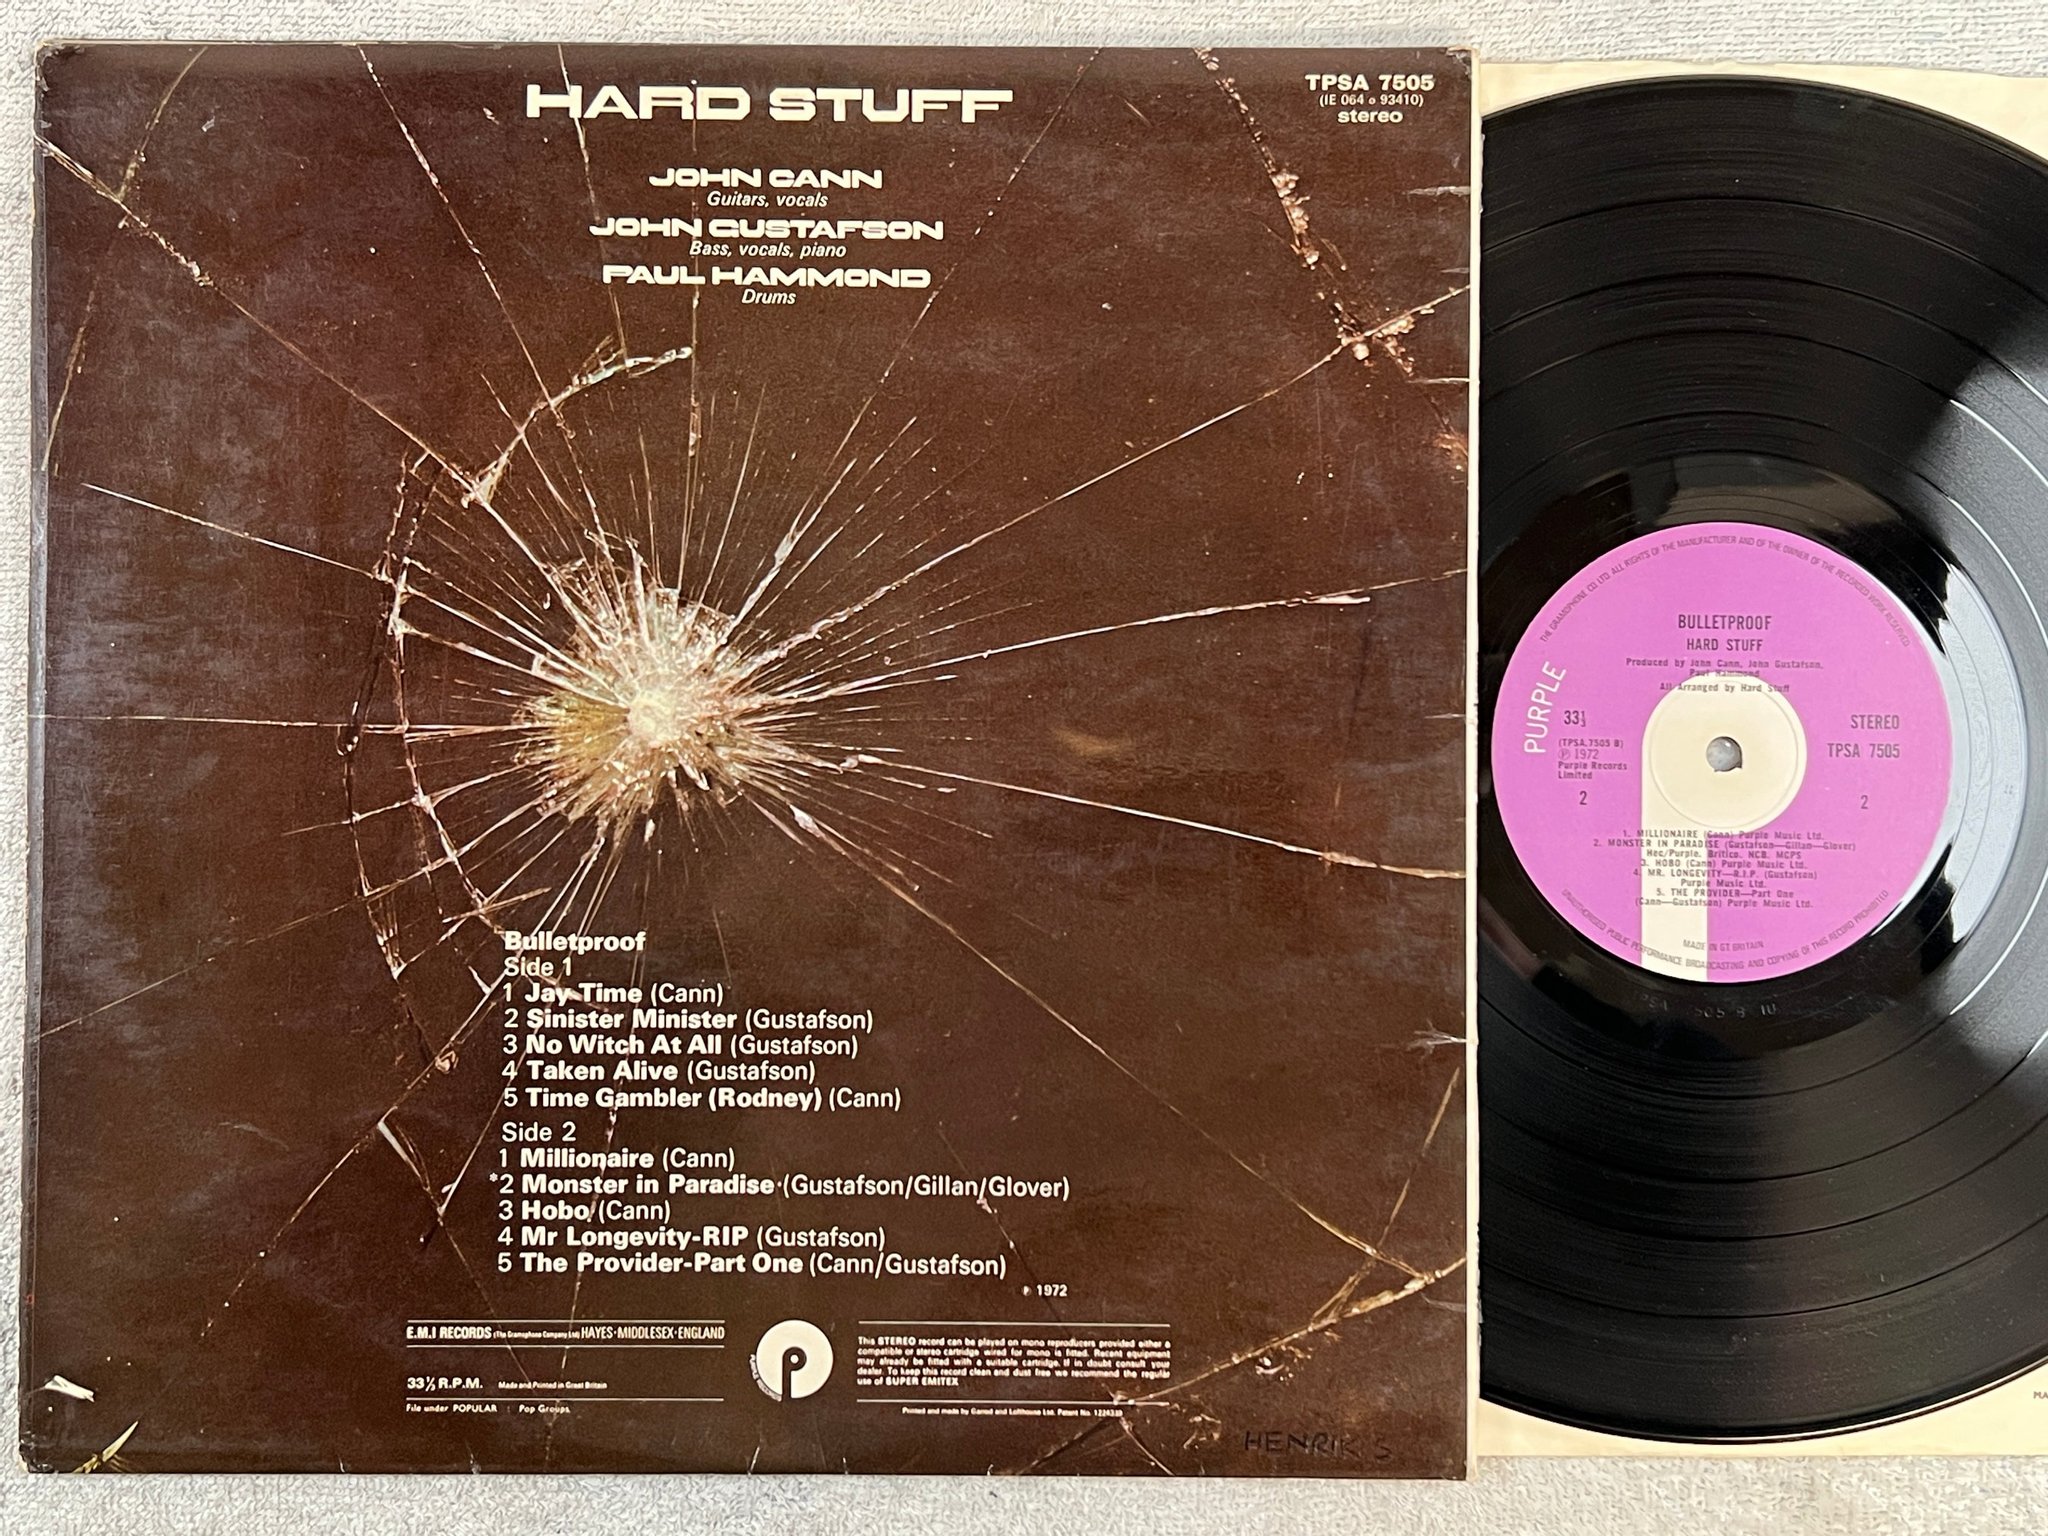 Omslagsbild för skivan HARD STUFF bulletproof LP -72 UK PURPLE TPSA 7505